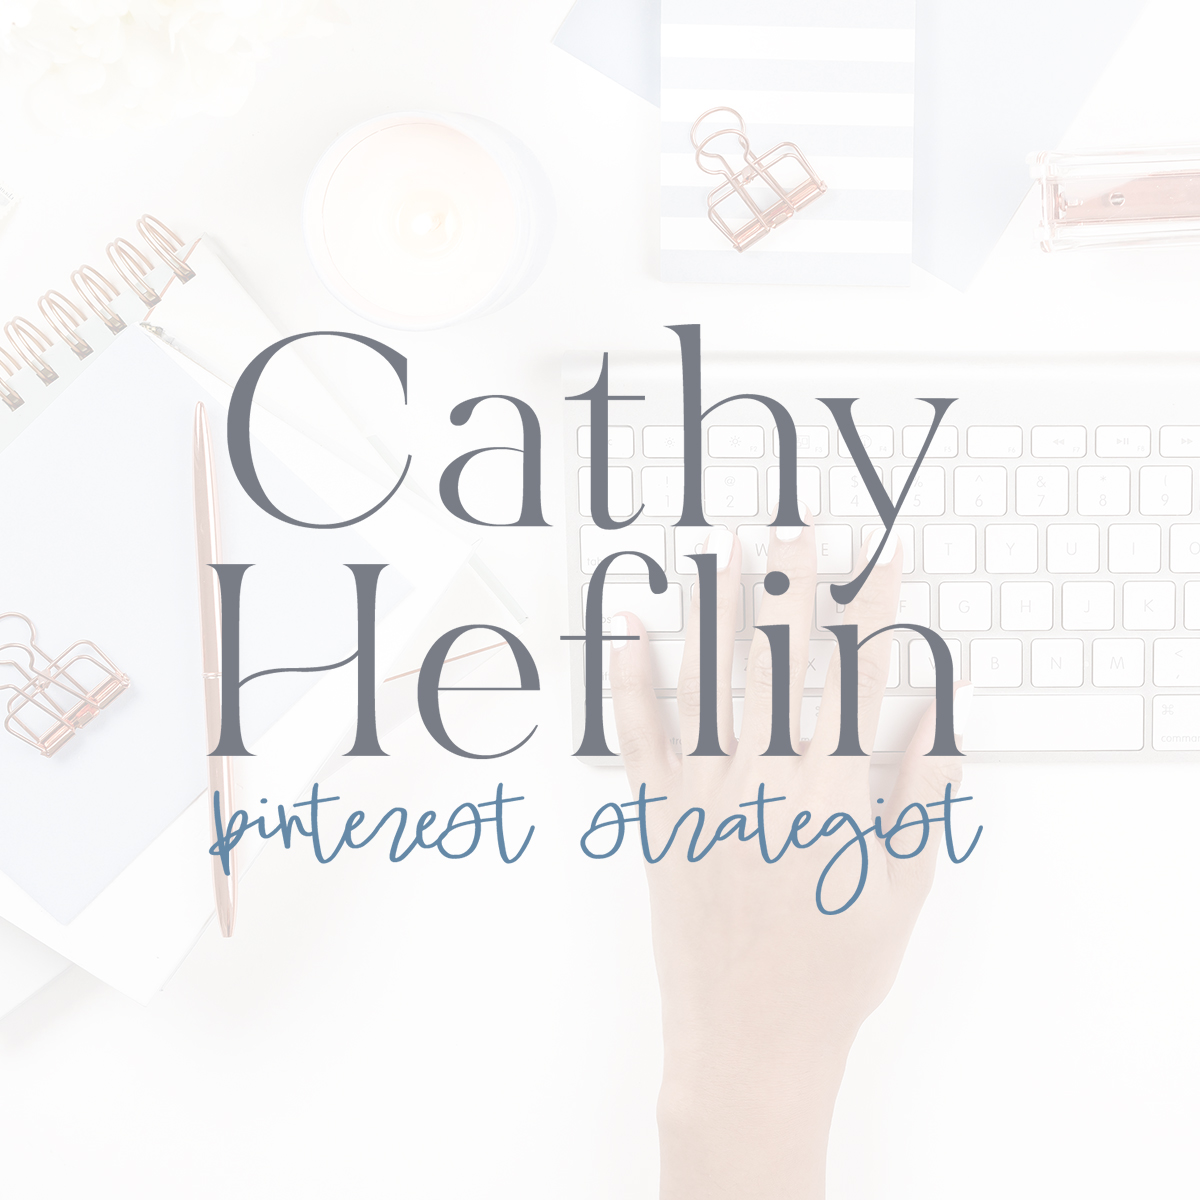 Cathy-Heflin-Logo